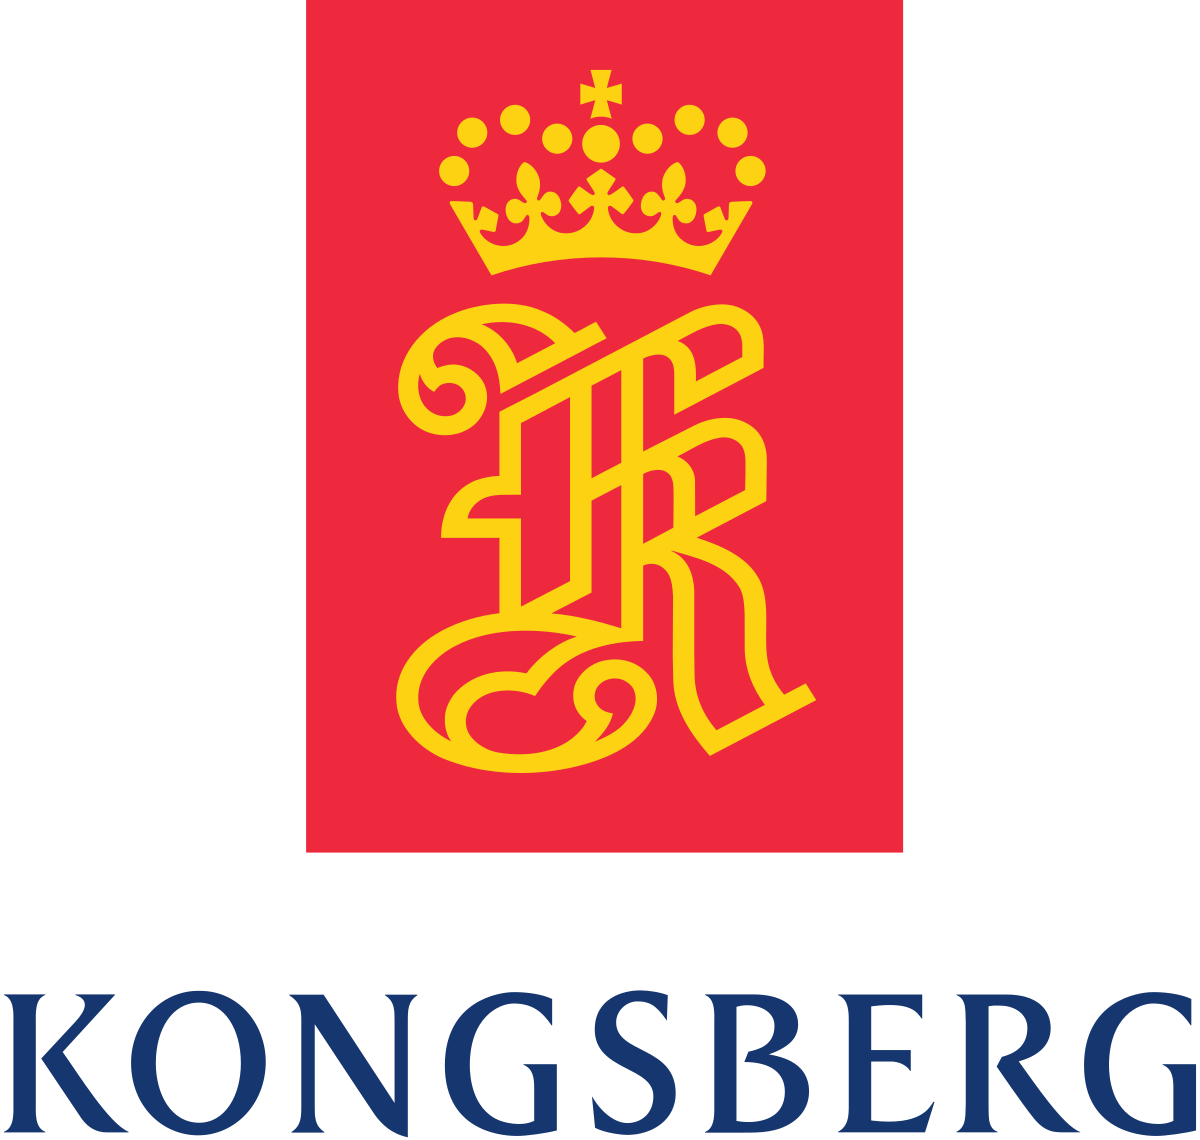 Kongsberg_logo